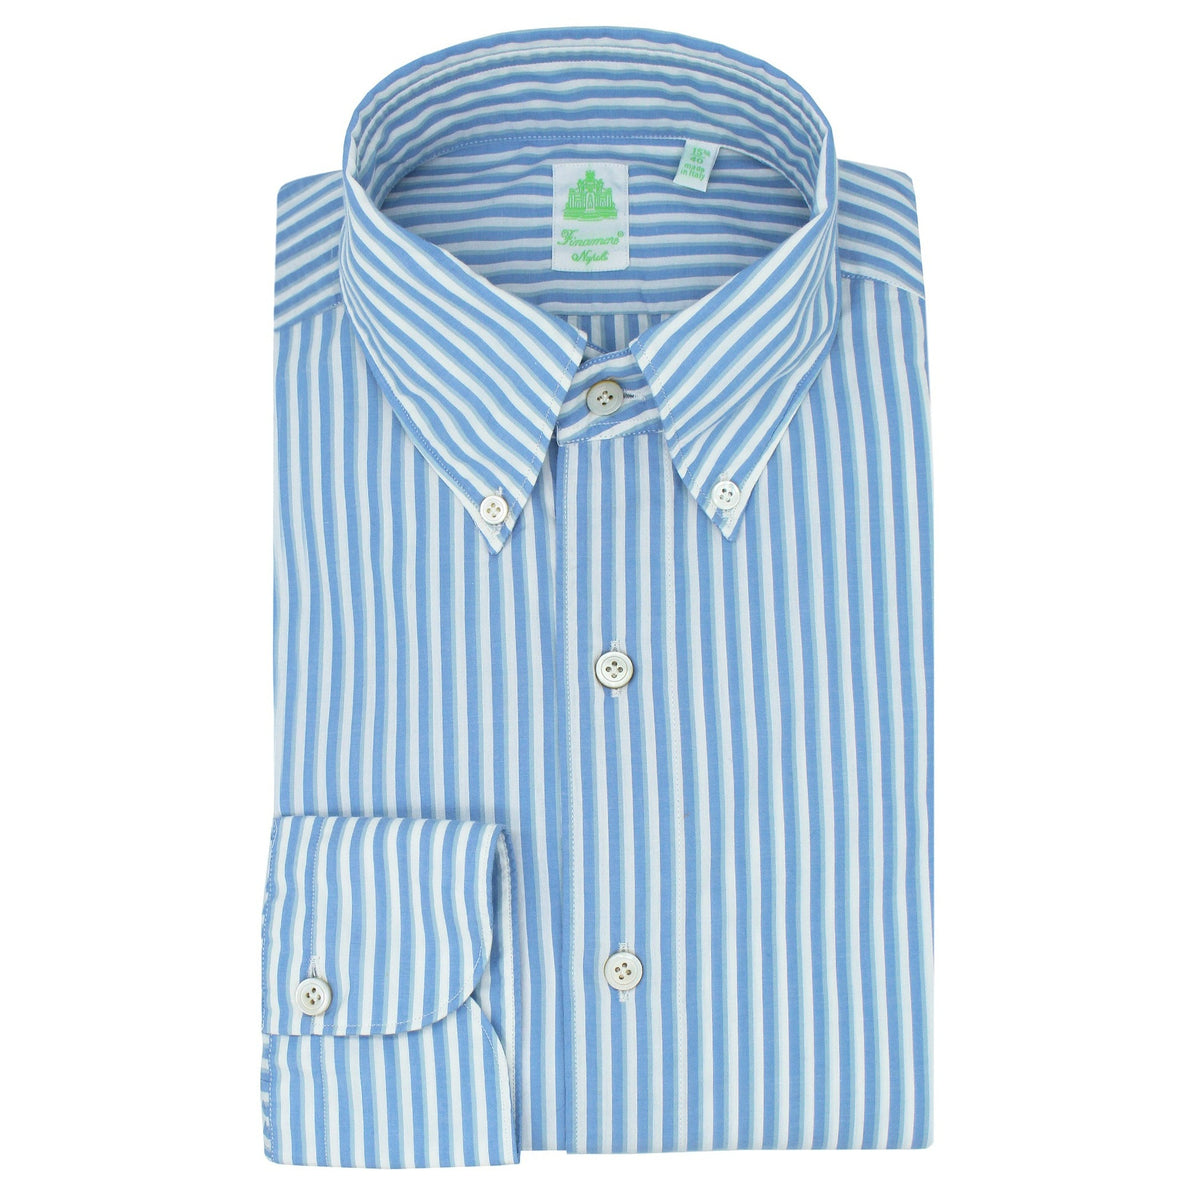 Tokyo slim shirt in cotton wide stripe shades of light blue